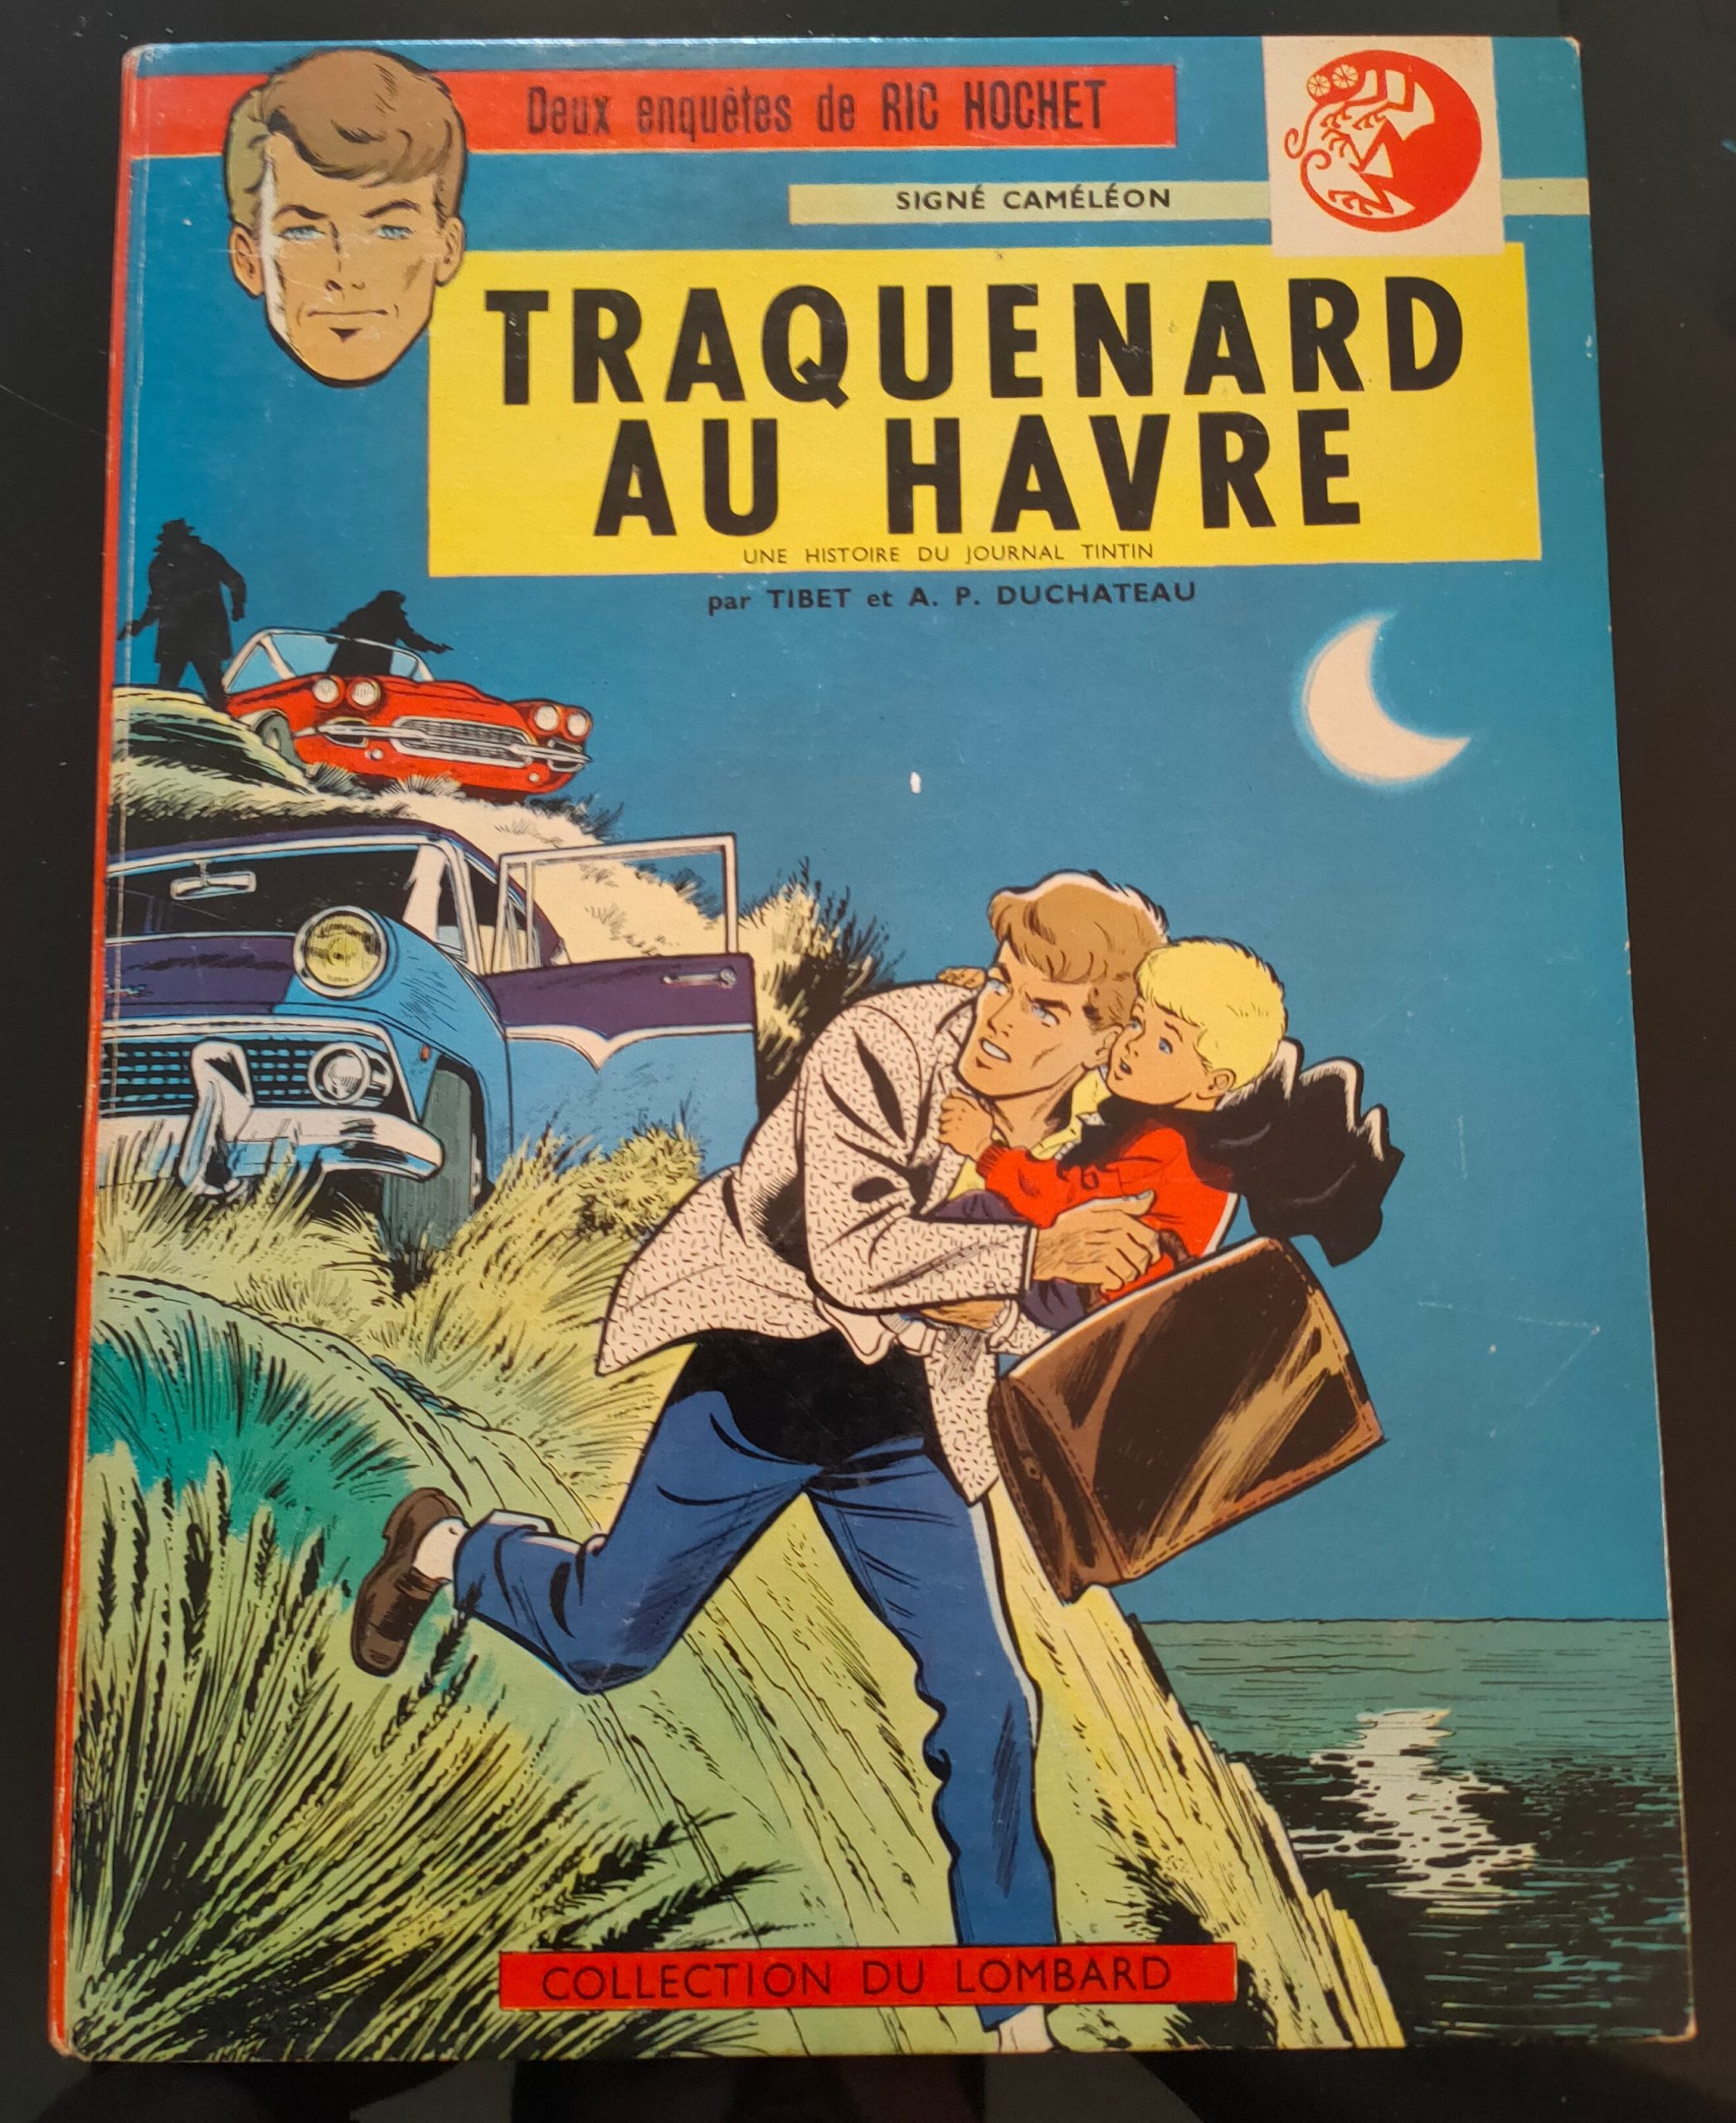 Featured image for “Traquenard au Havre Série Ric Hochet / Lombard / signé Caméléon 1963”